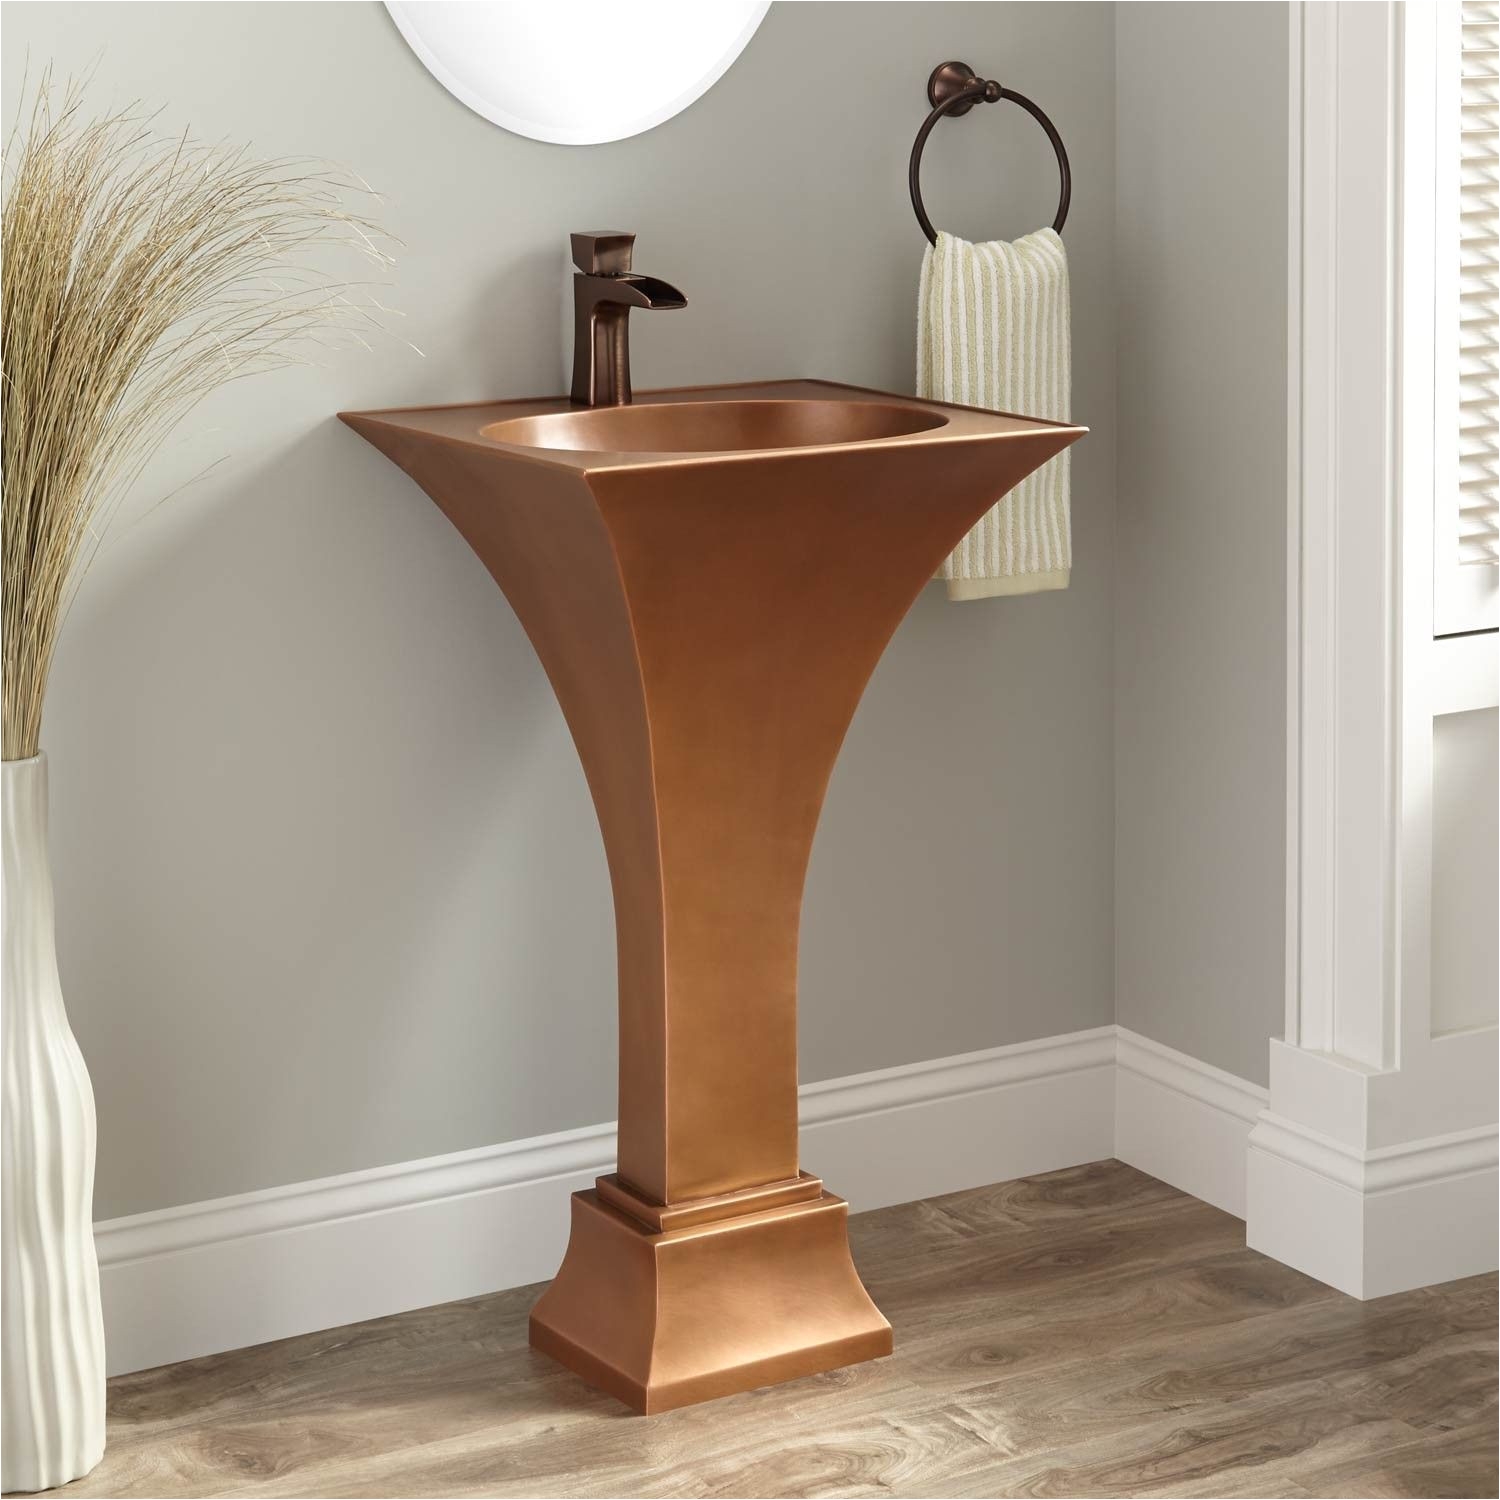 see through bathtub inspirational flared smooth copper pedestal sink bathroom pinterest